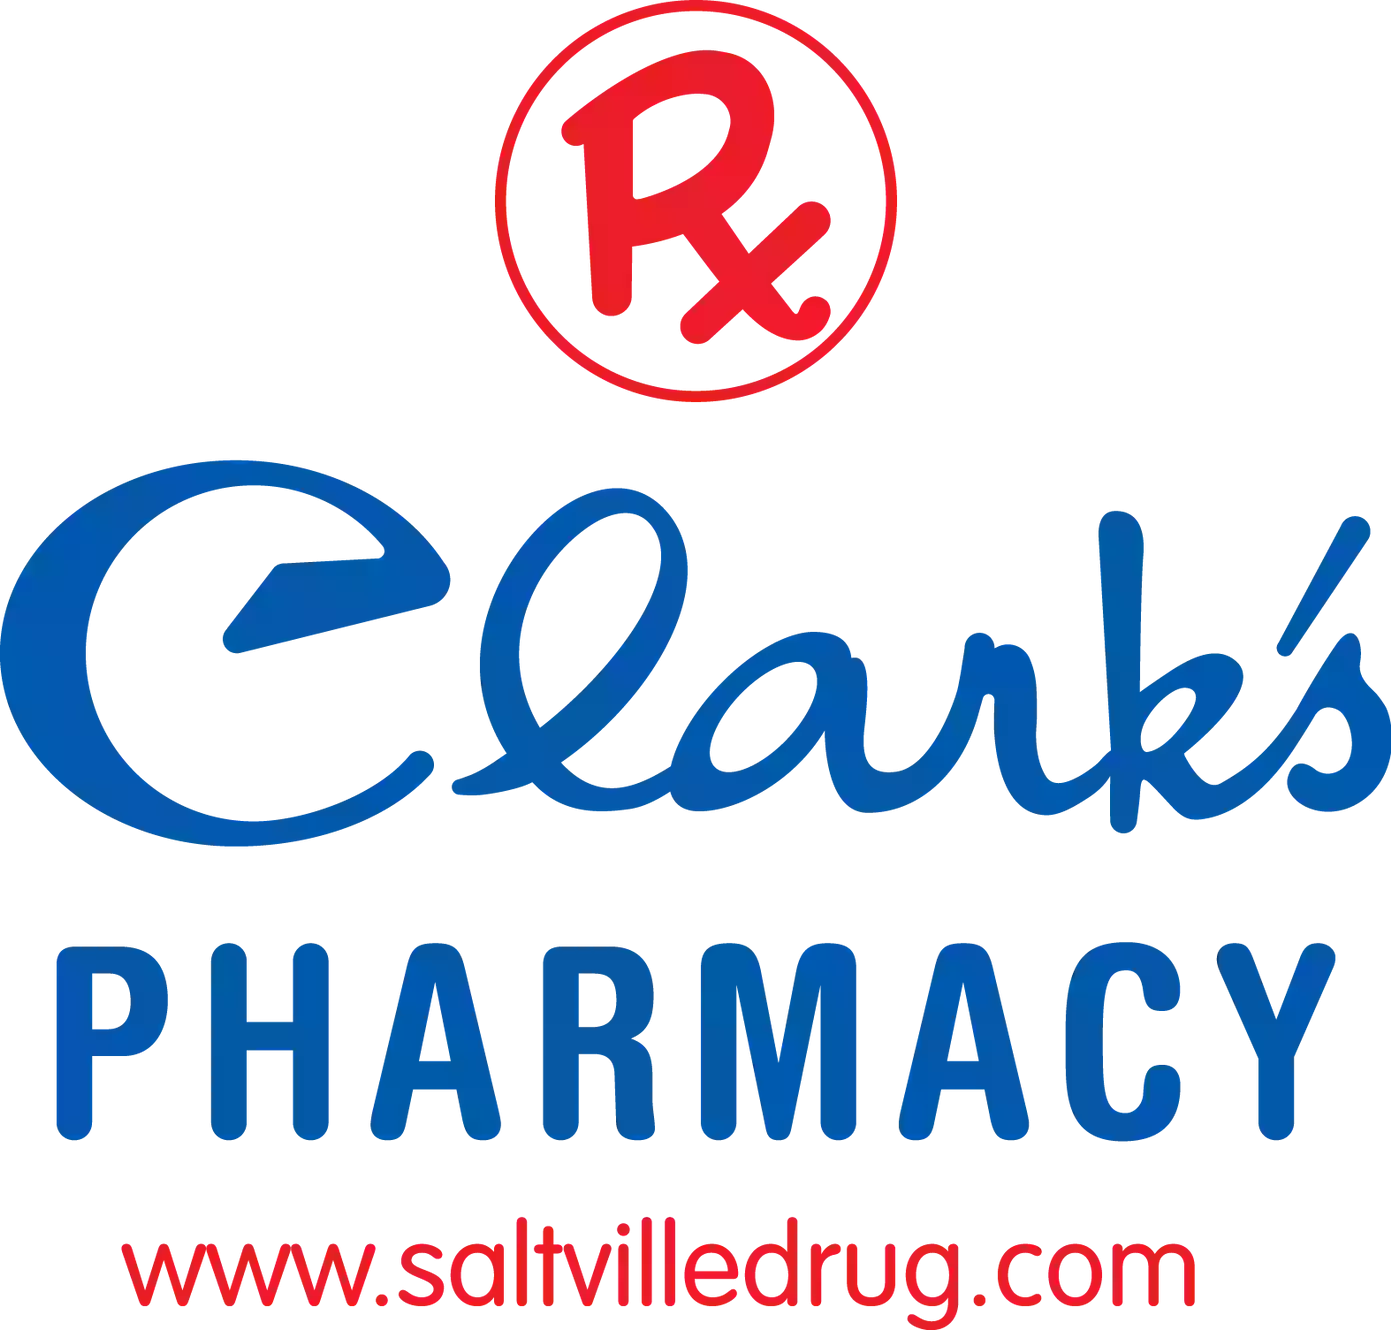 Clark's Pharmacy